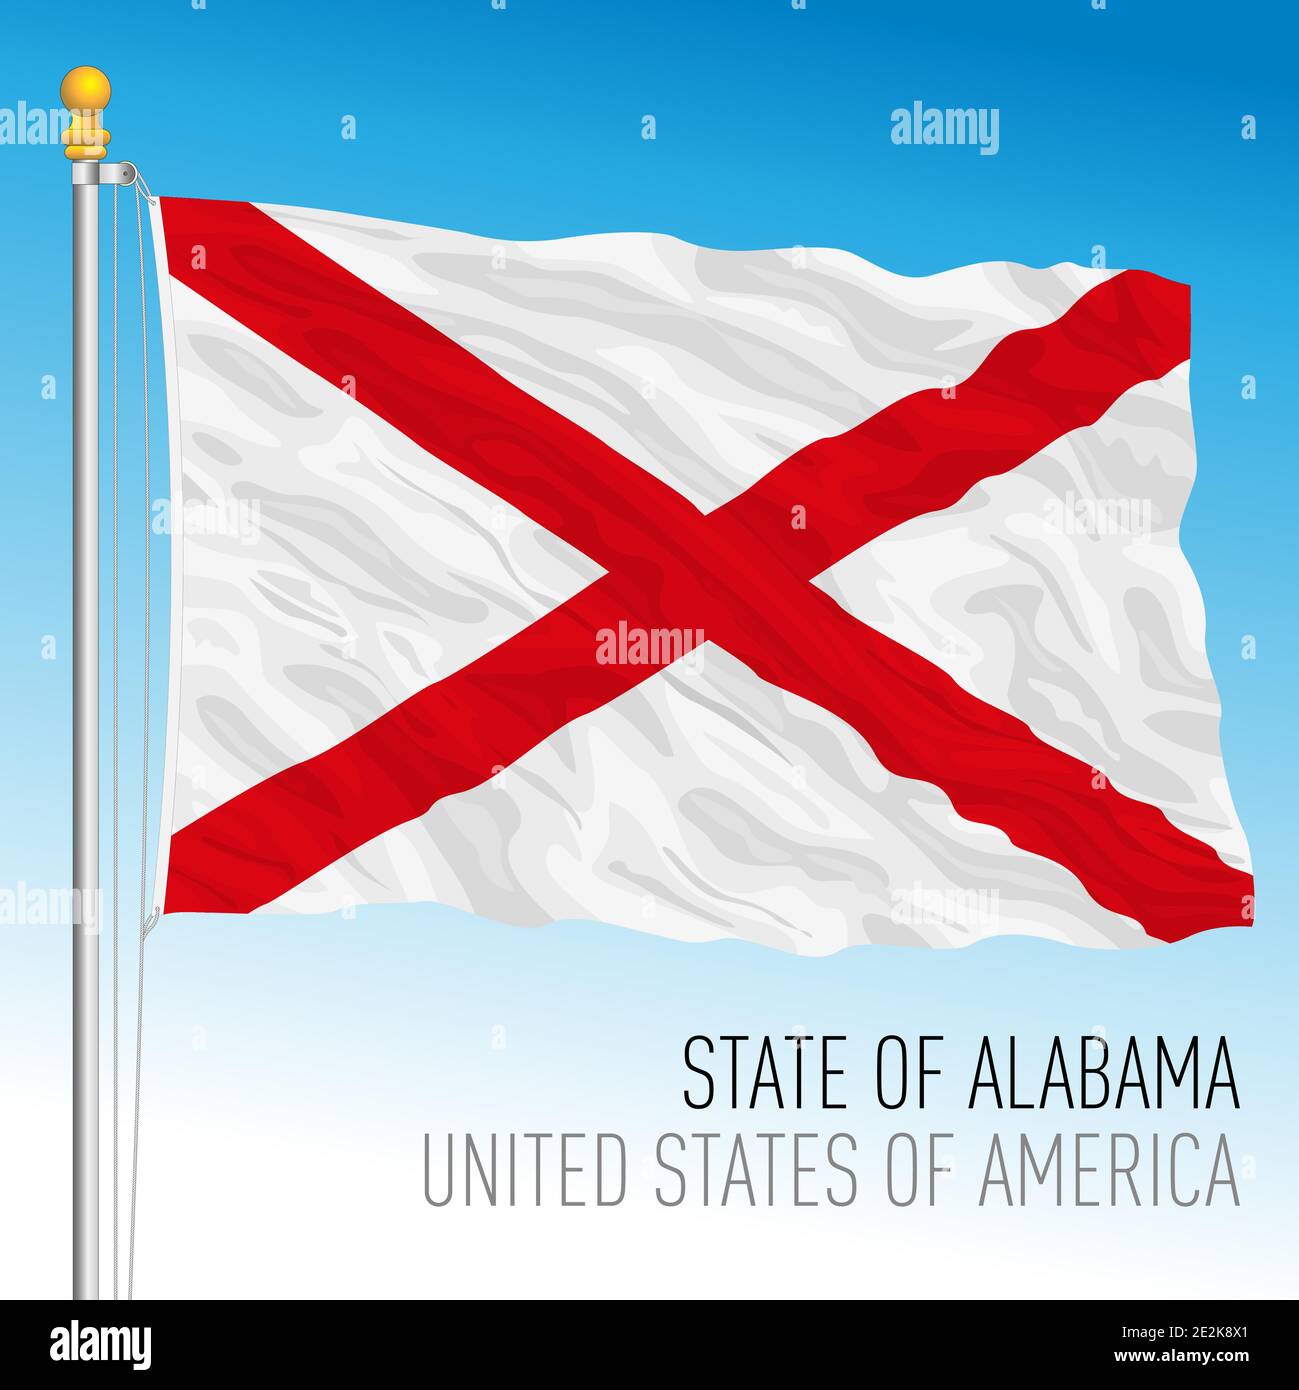 Alabama Staatsflagge, Vereinigte Staaten von Amerika, Vektorgrafik Stock Vektor